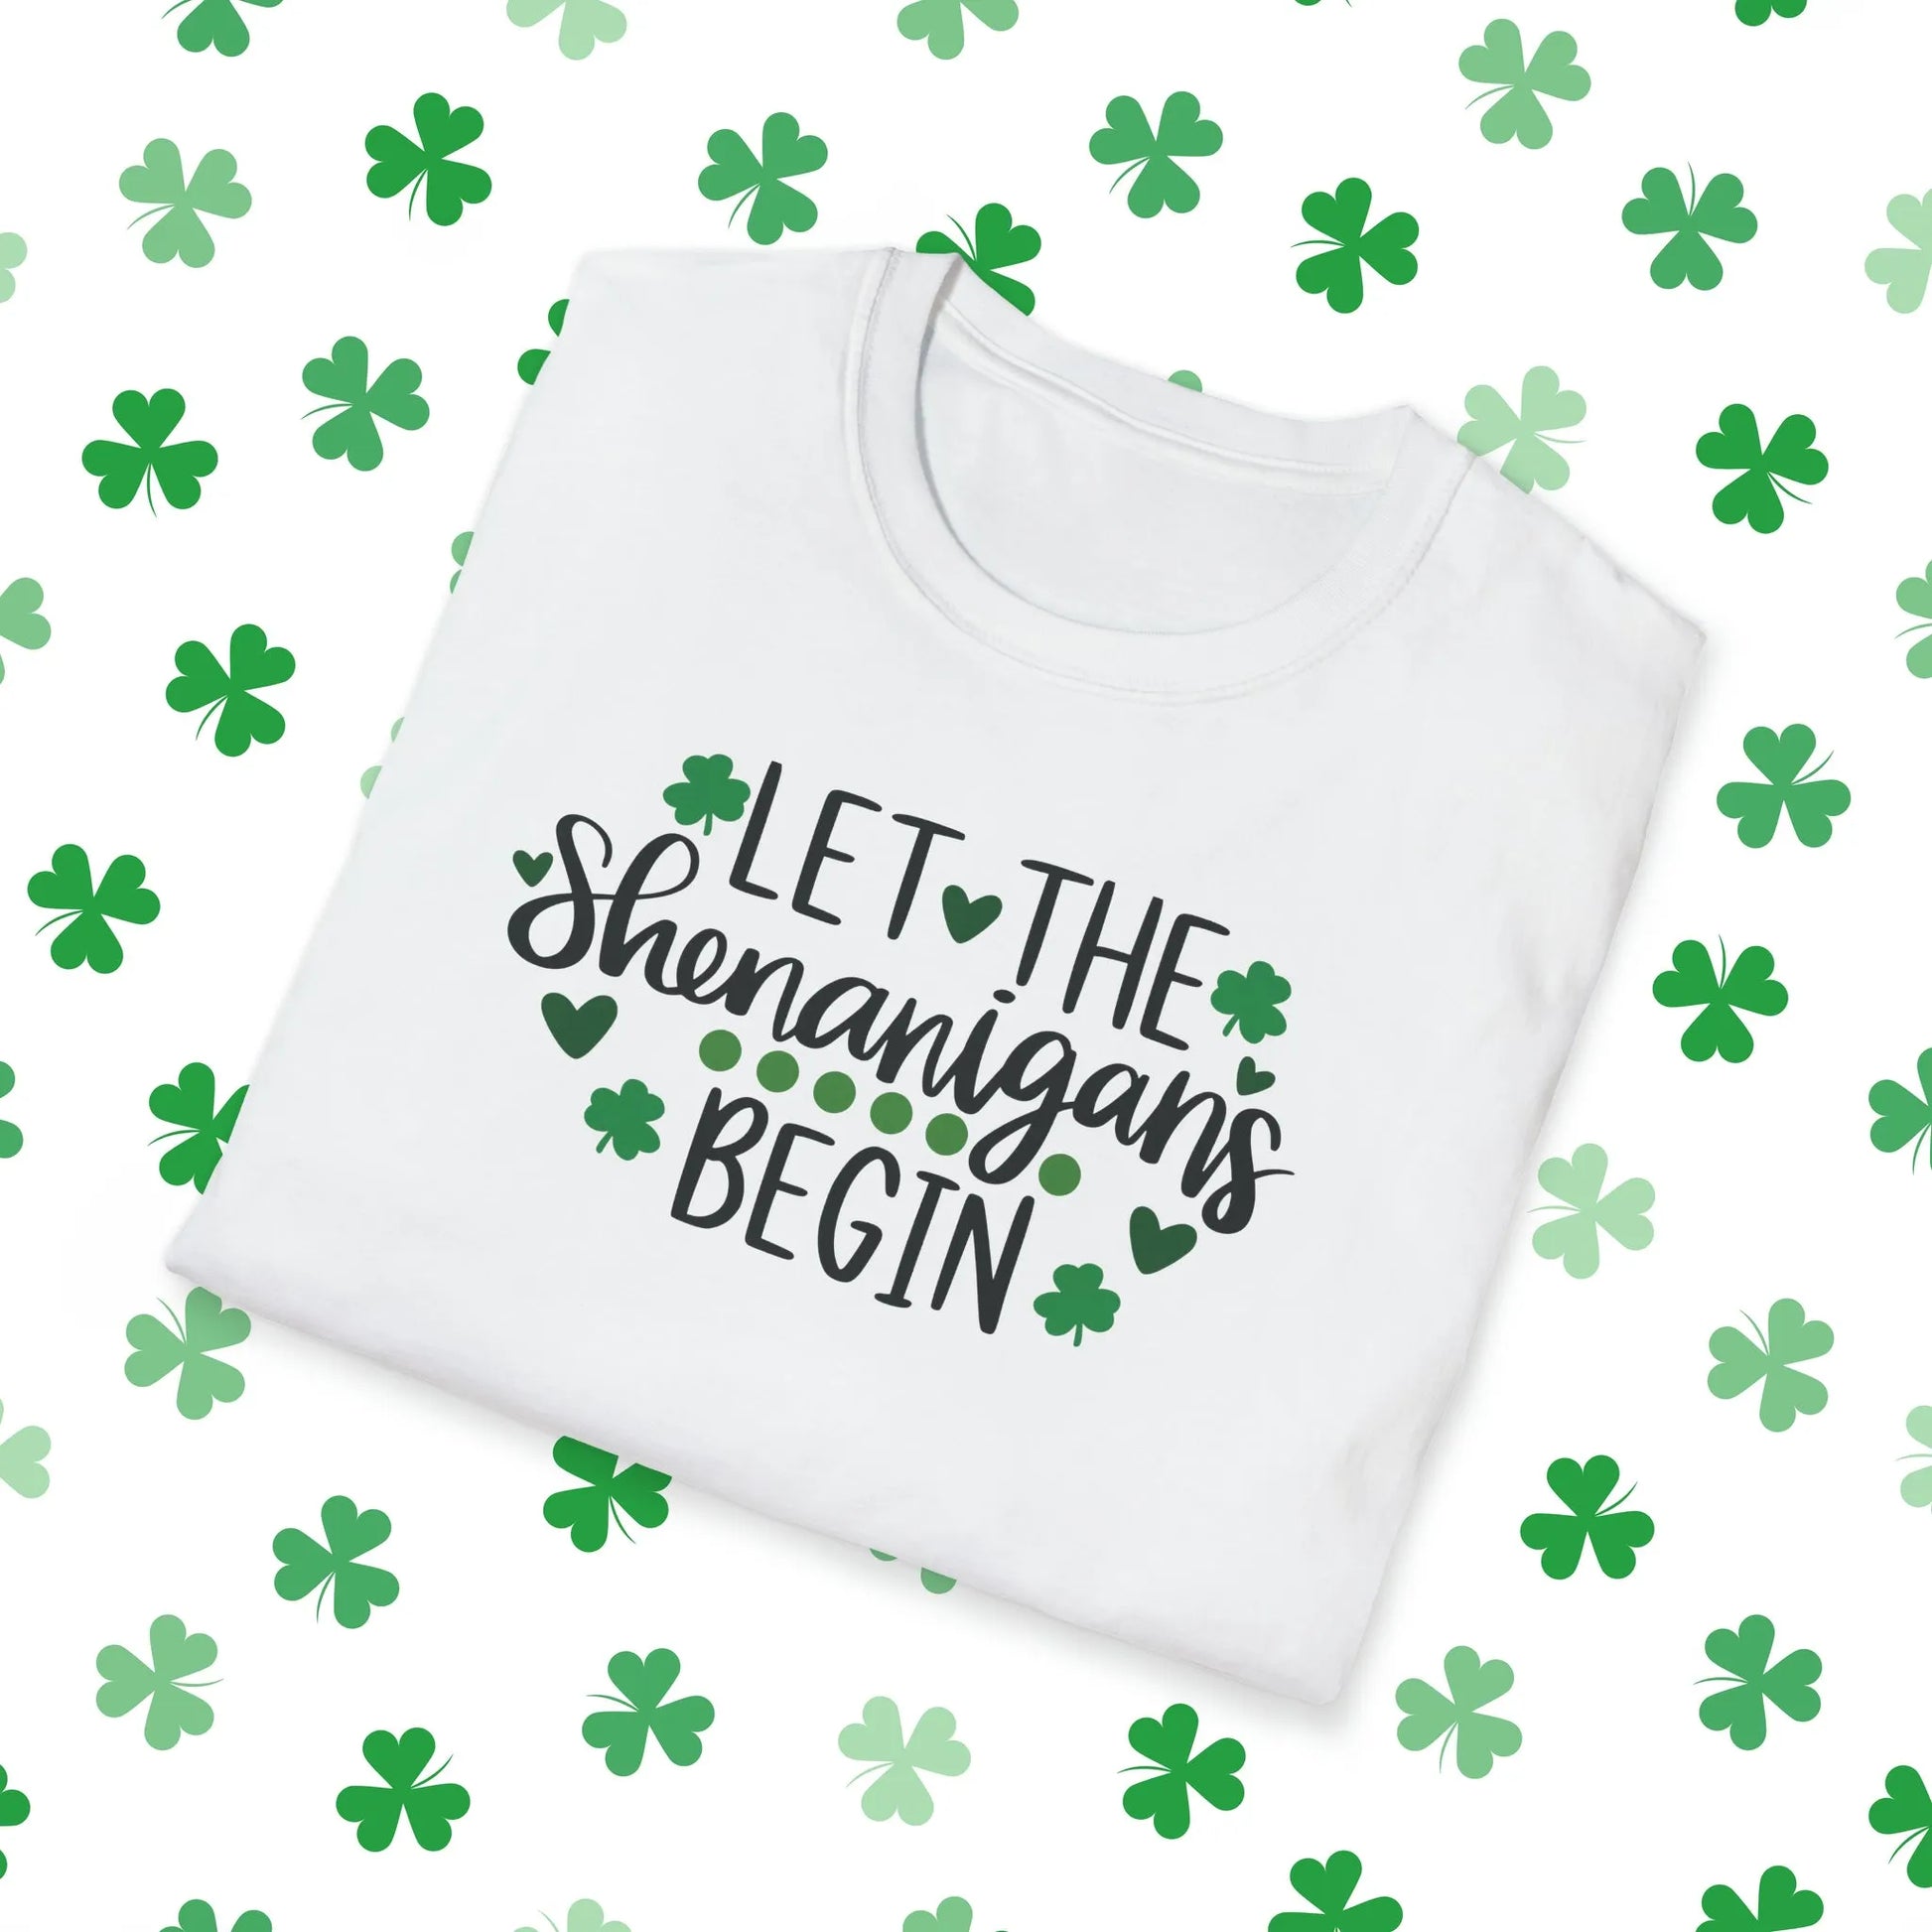 Let The Shenanigans Begin St. Patrick's Day T-Shirt - Comfort & Charm - Let The Shenanigans Begin Shirt White Folded